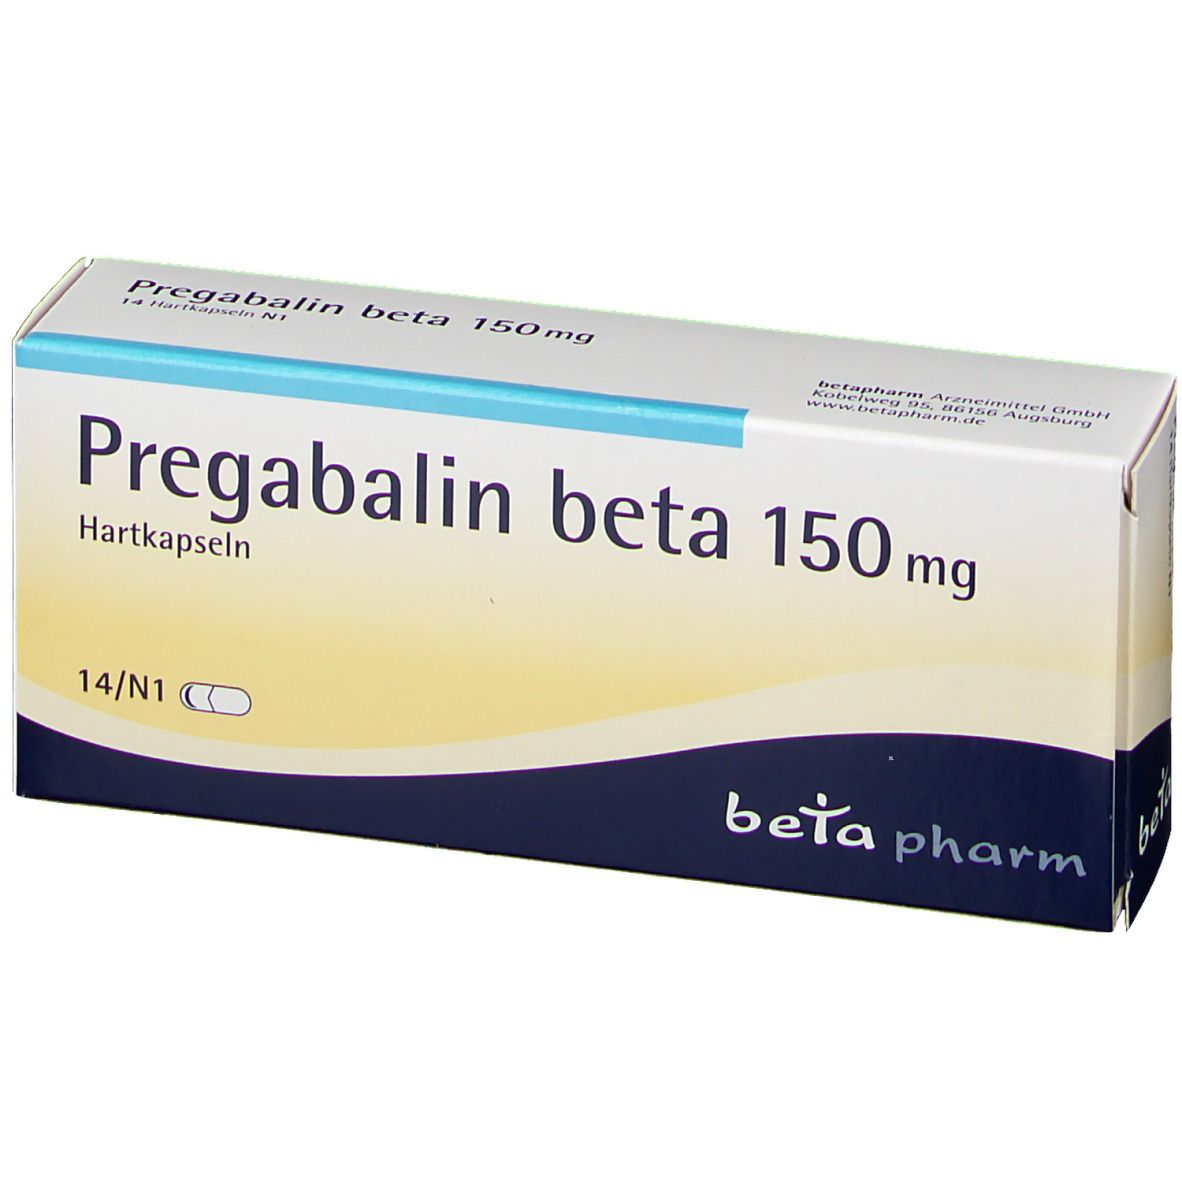 Pregabalin beta 150 mg